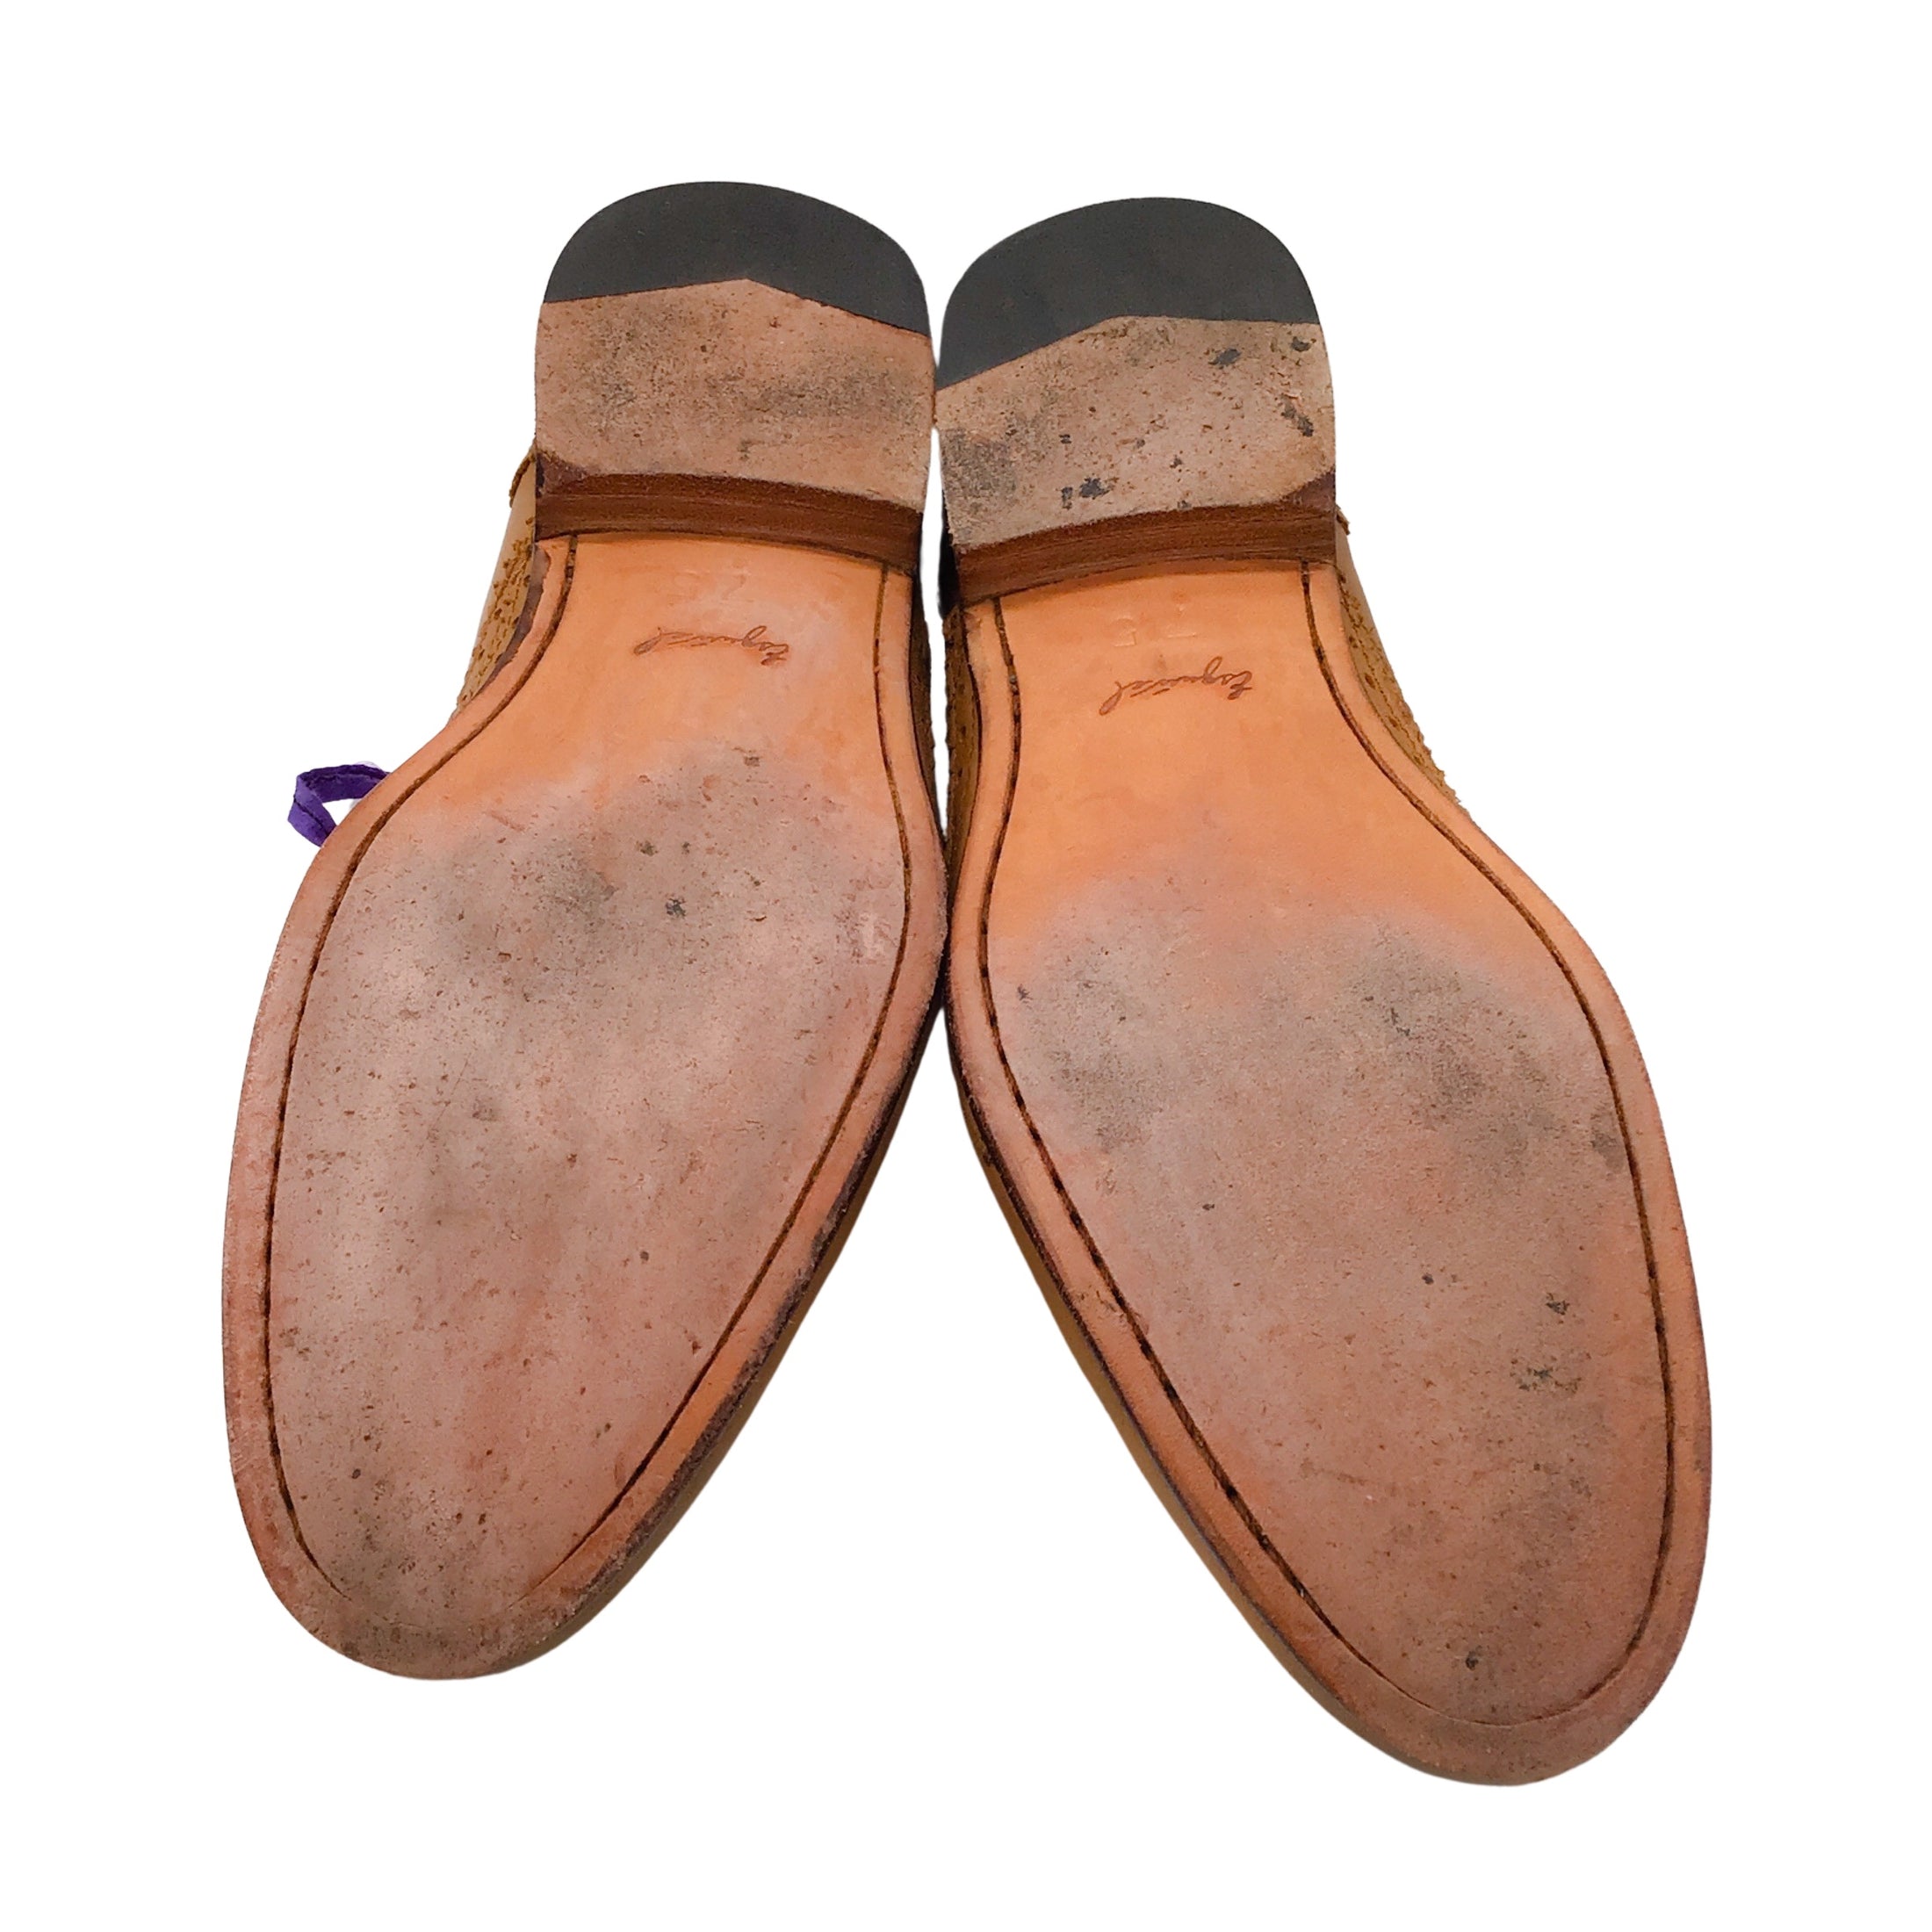 Esquivel Cognac Distressed Leather Oxford Shoes